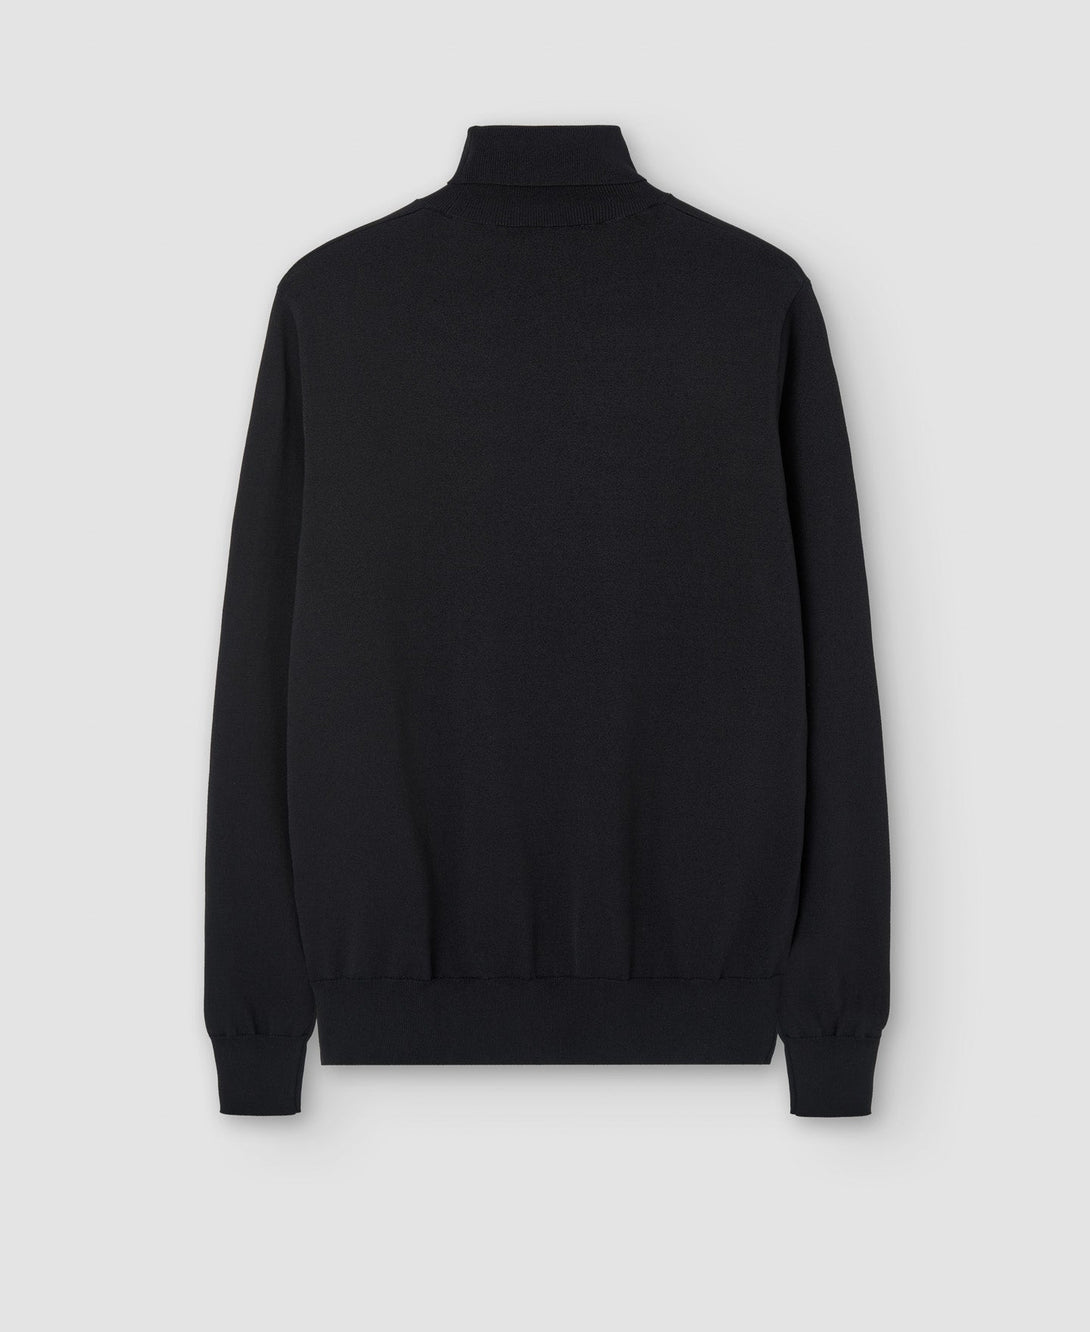 Men Jersey | Black Knitted Turtleneck Sweater by Spanish designer Adolfo Dominguez